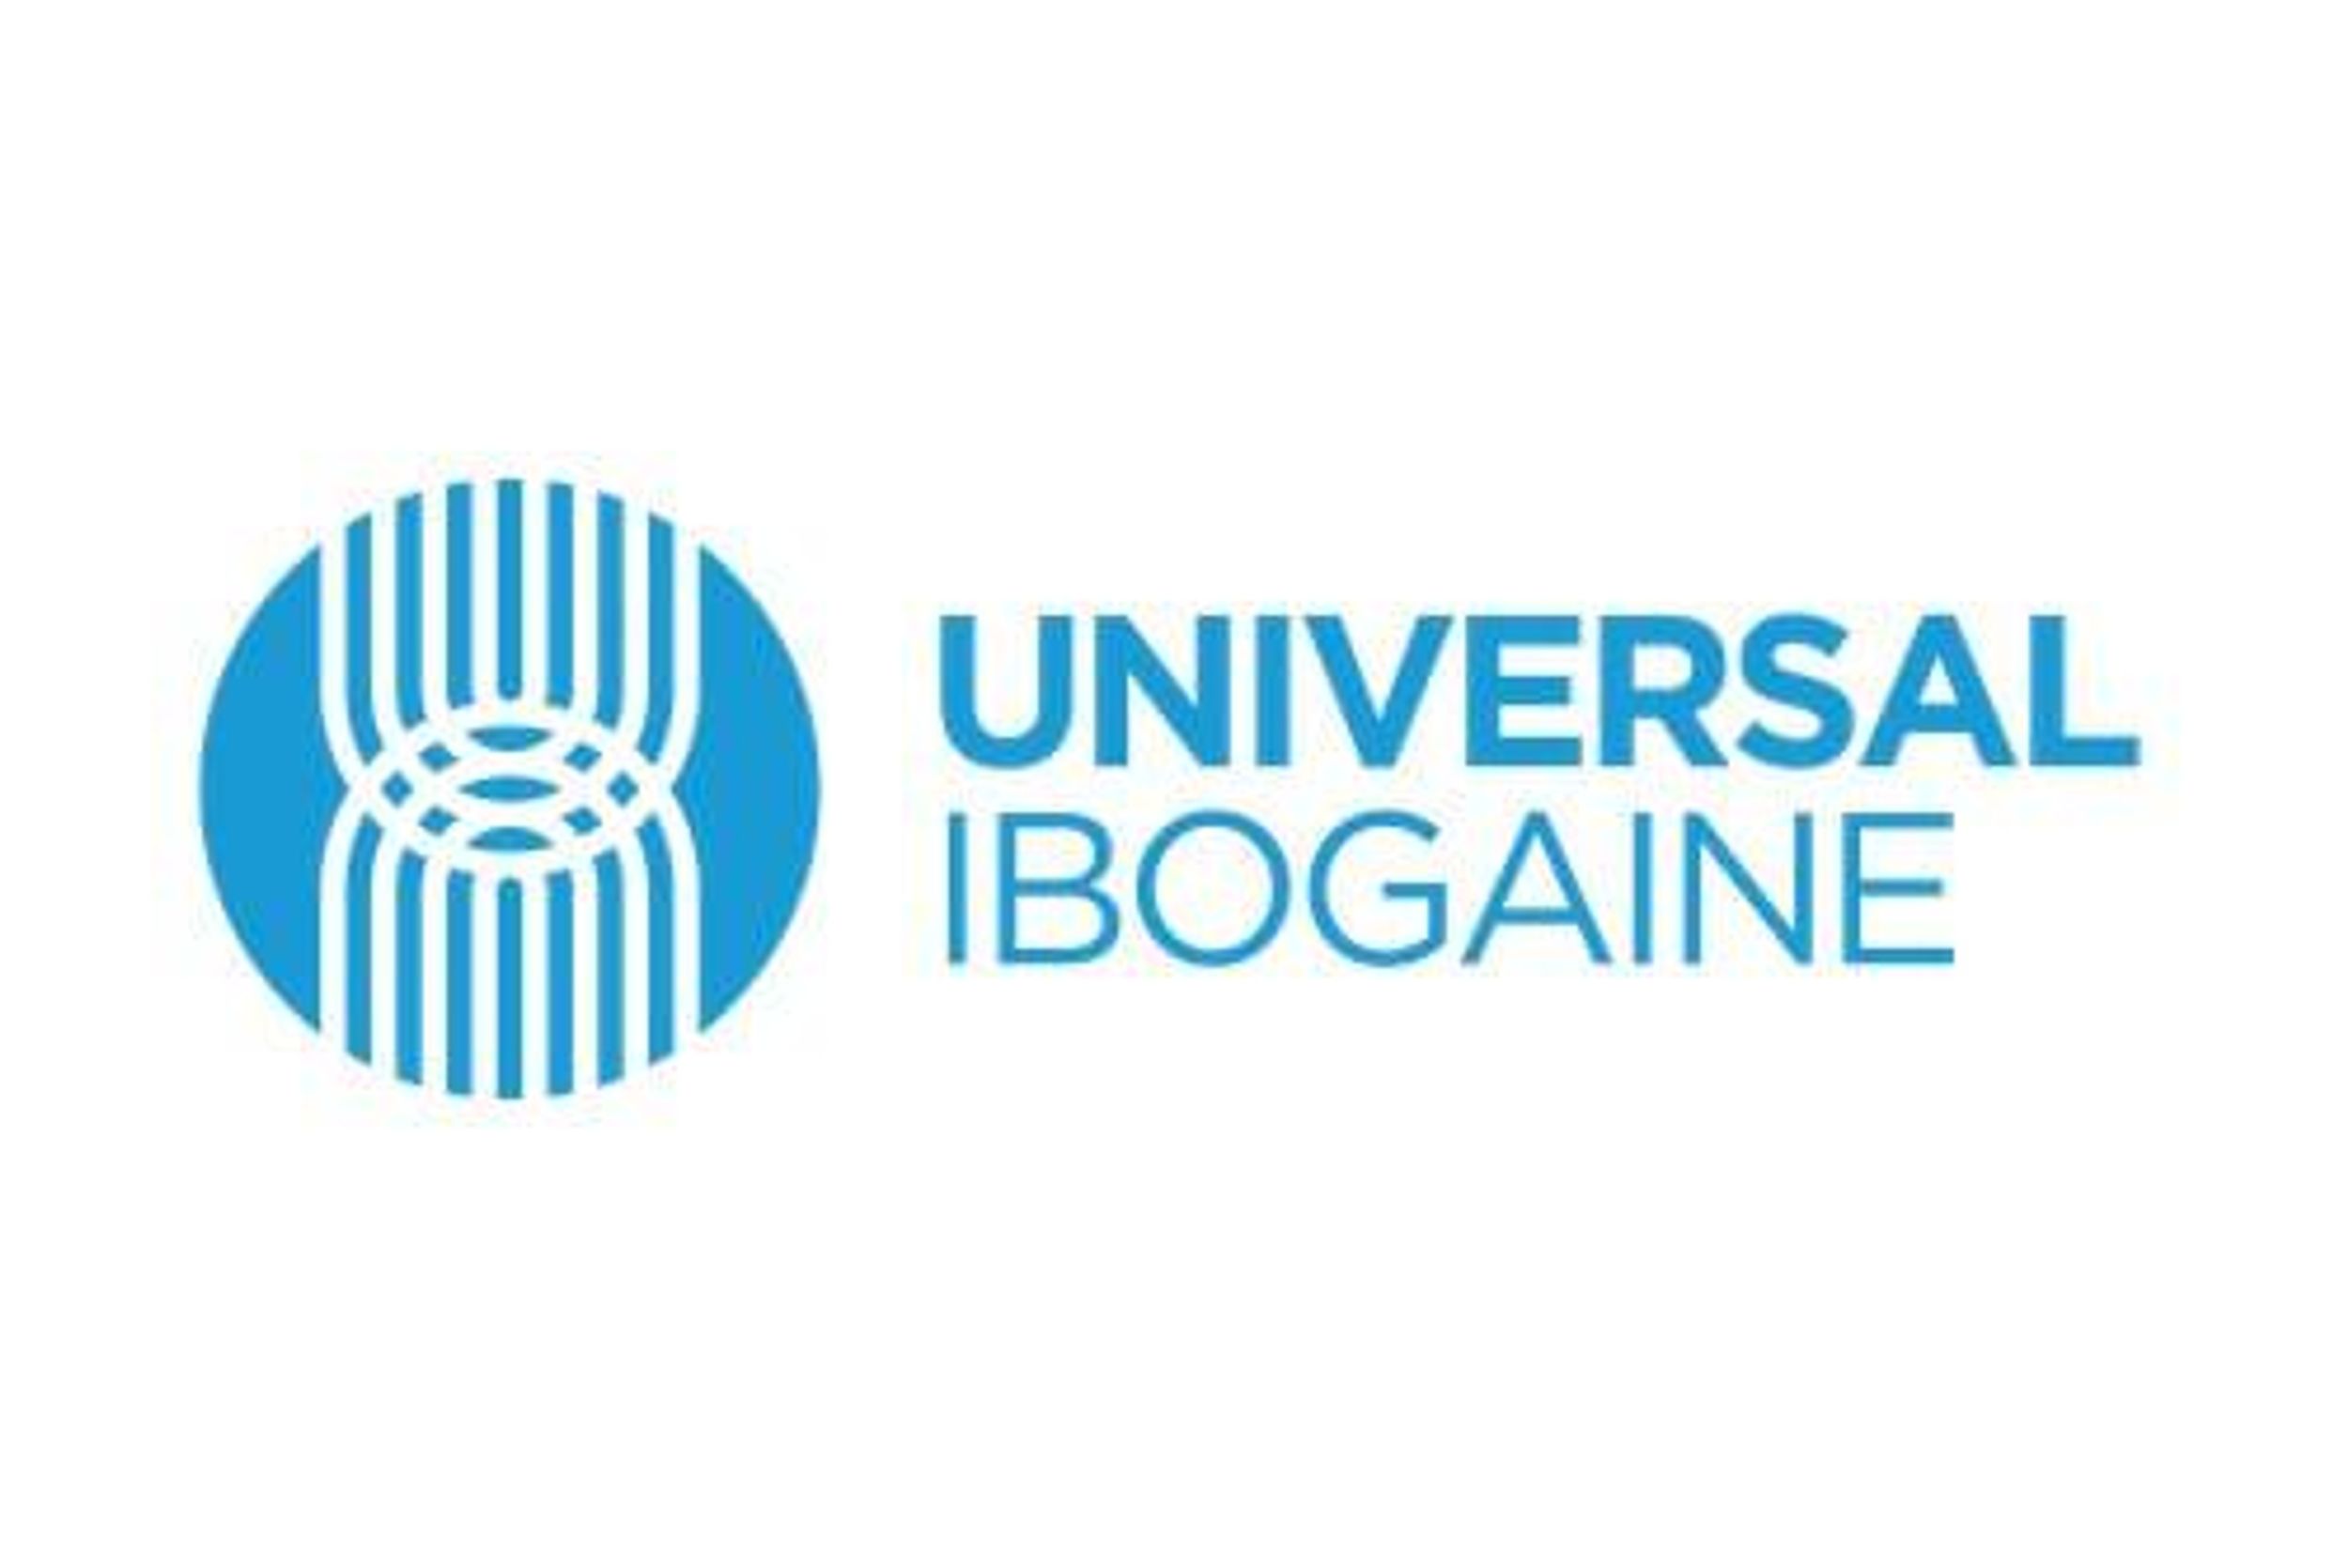 UNIVERSAL IBOGAINE RETAINS SHAYNE NYQUVEST AS CAPITAL MARKETS ADVISOR